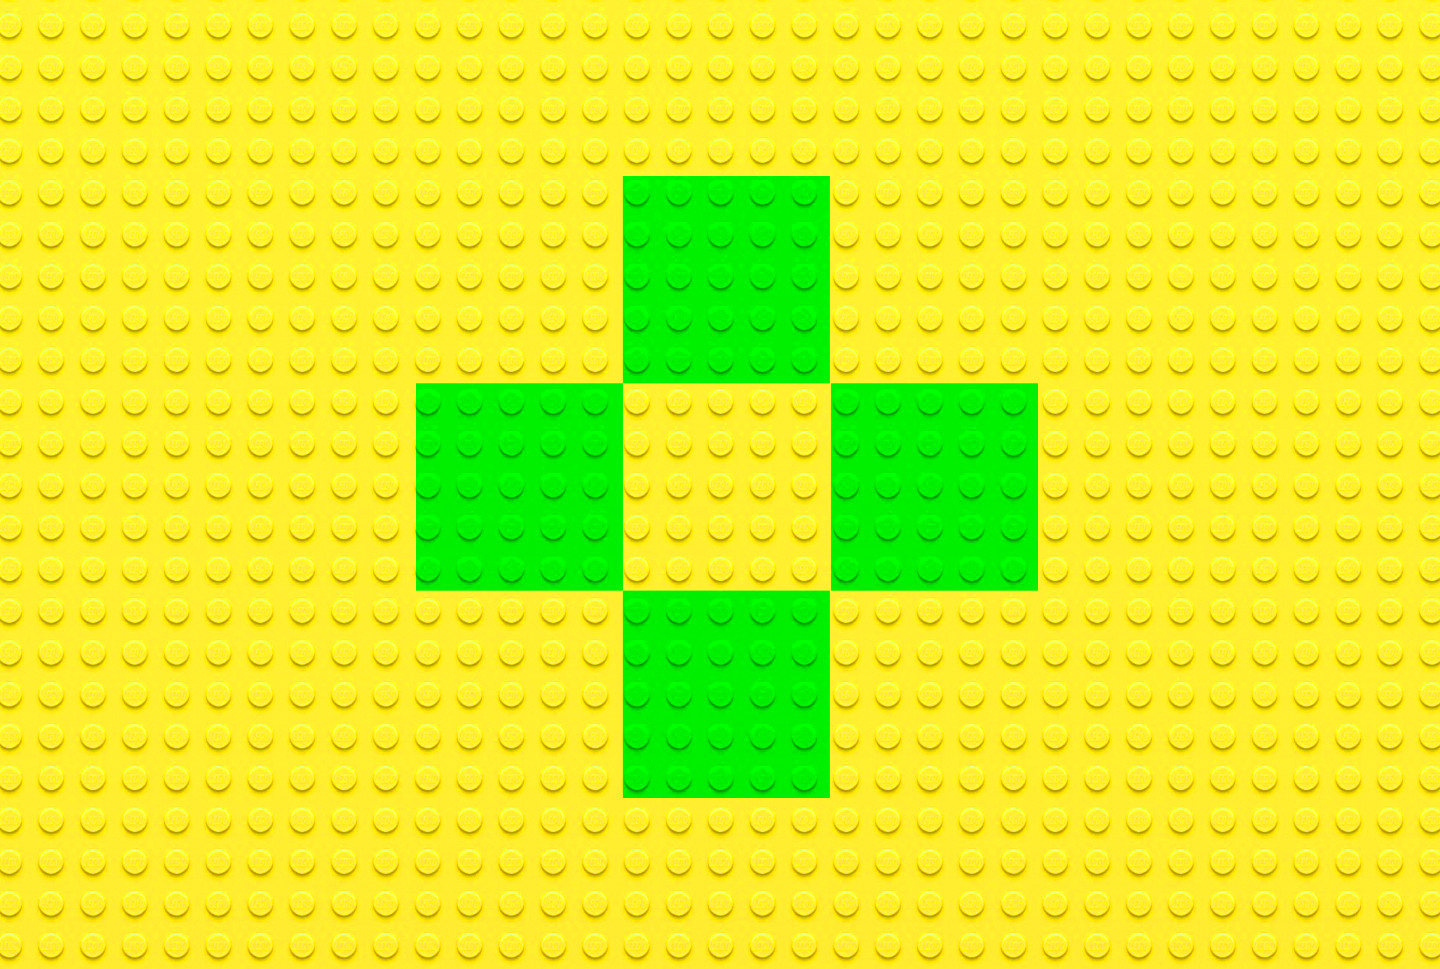 Green pixel flower on yellow in LEGO design